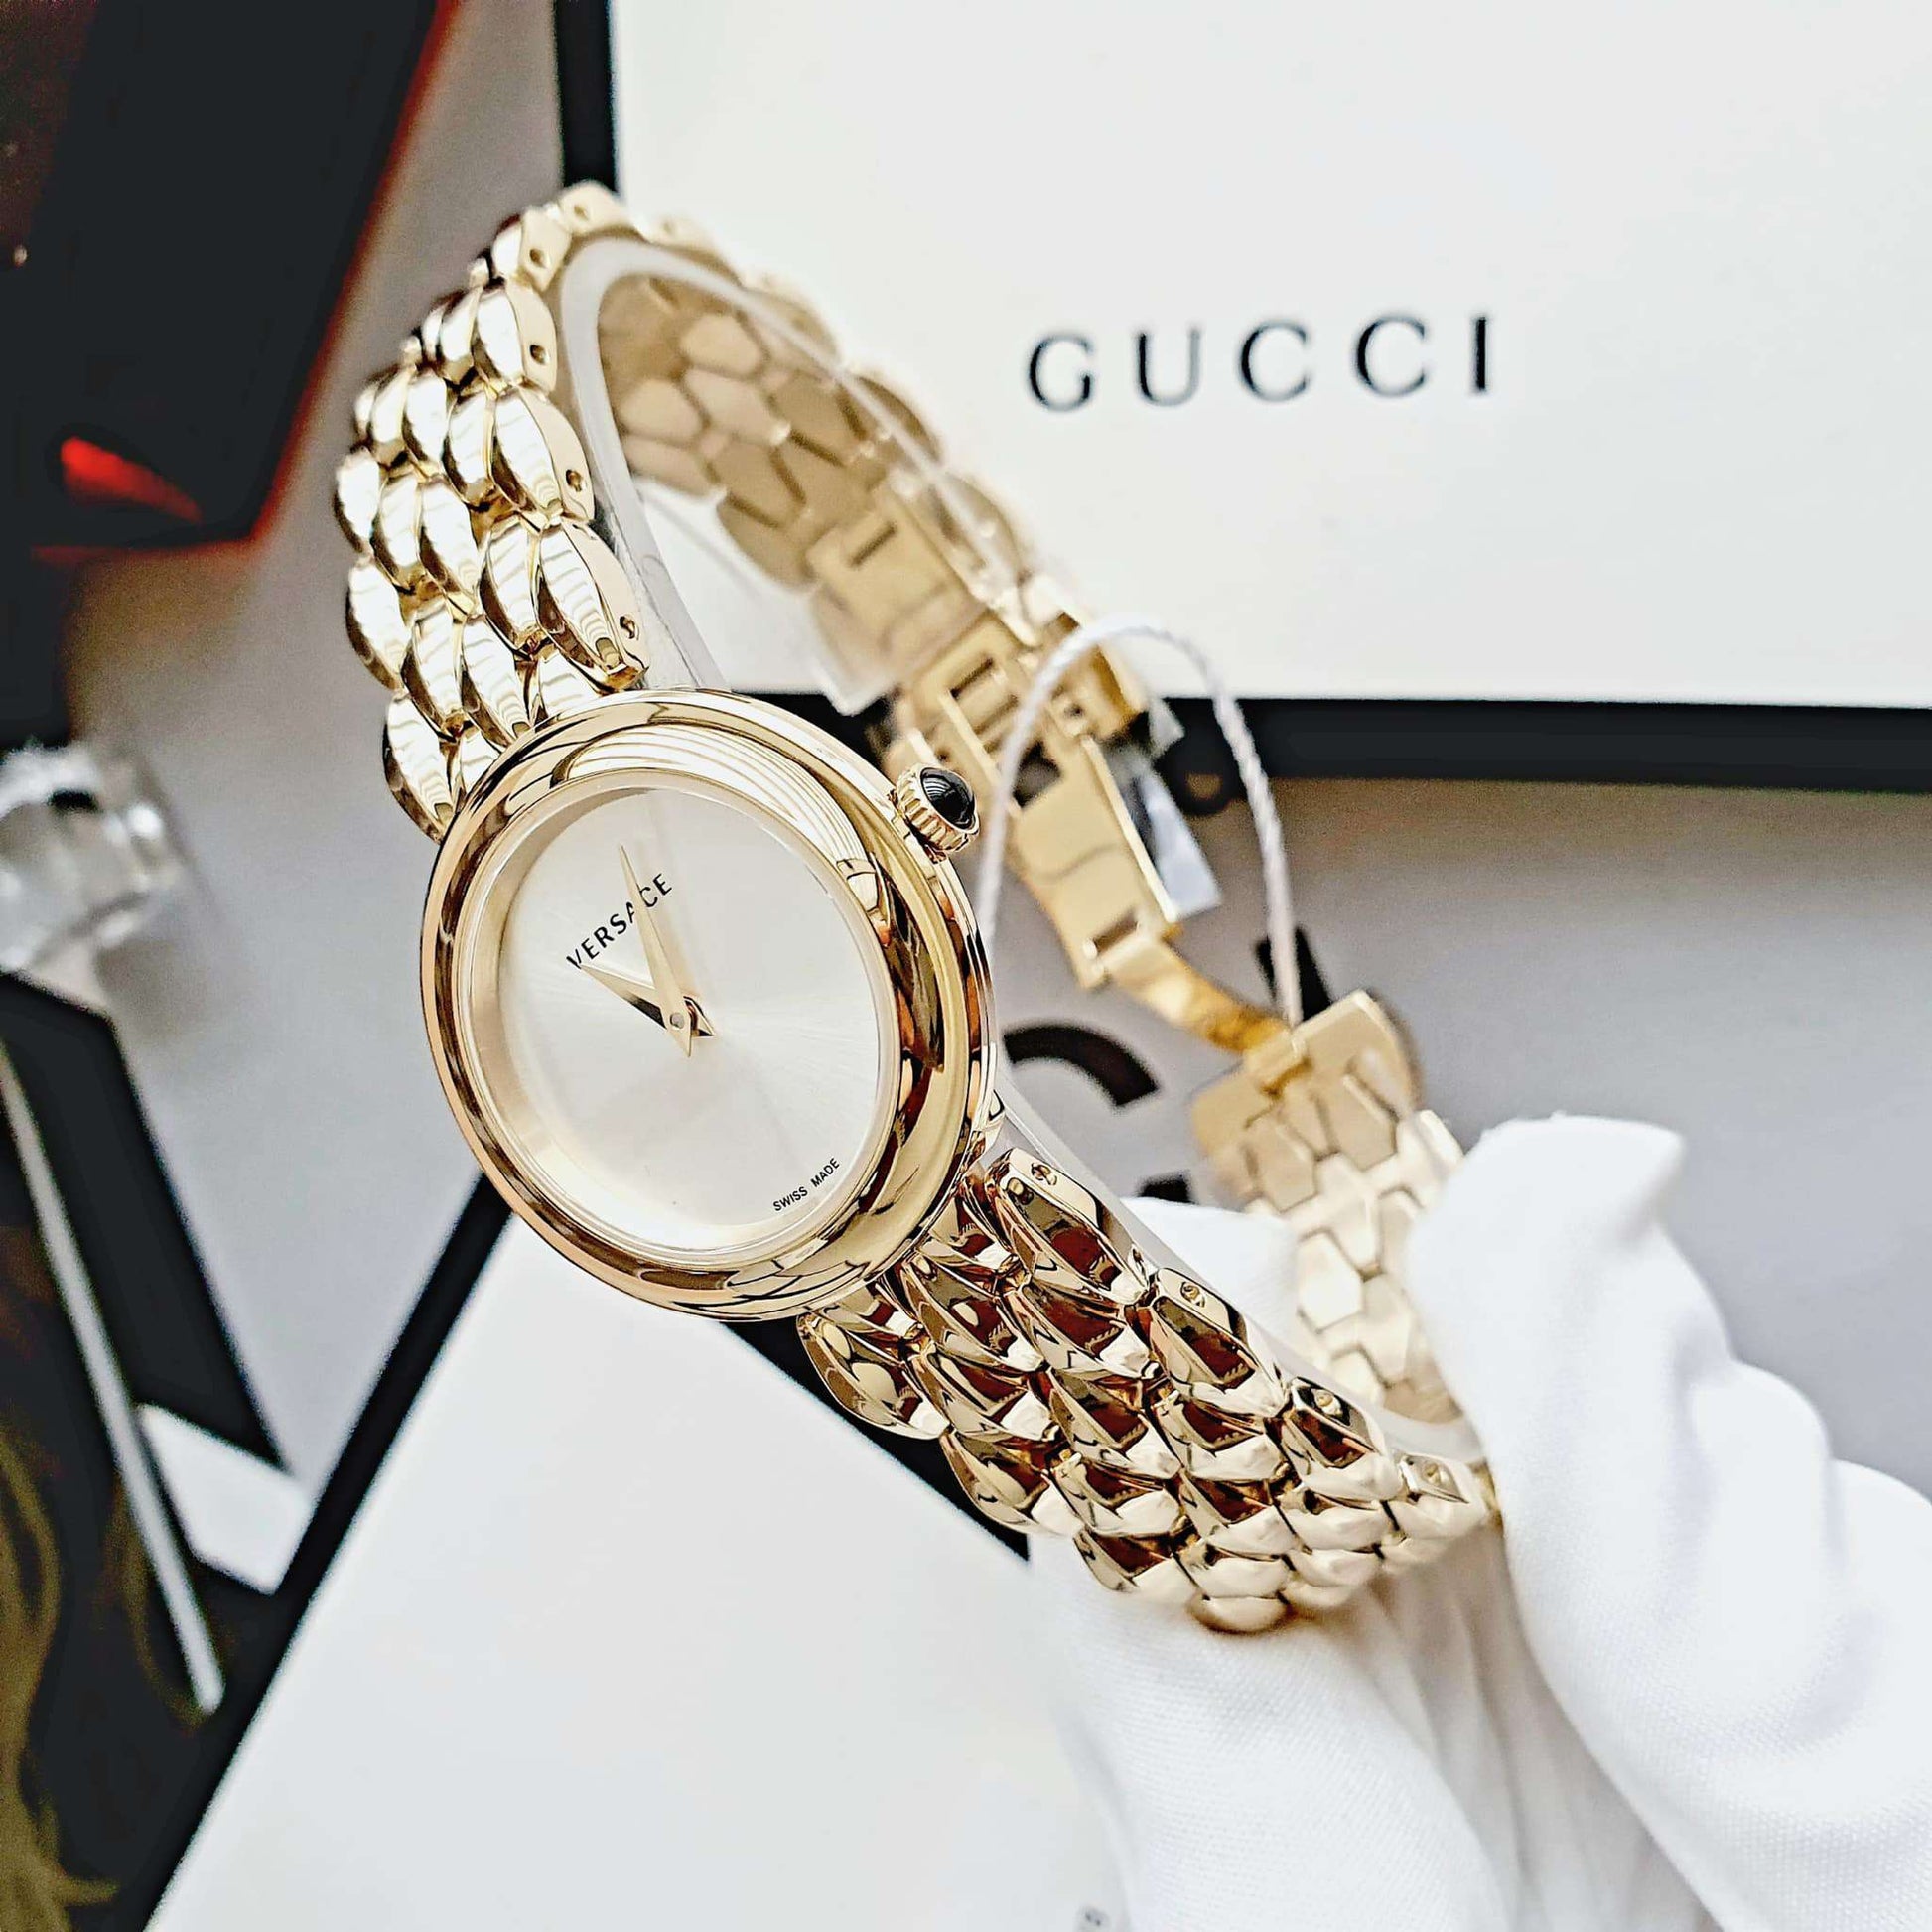 Versace V-Flare Quartz Silver Dial Gold Steel Strap Watch for Women - VEBN00818